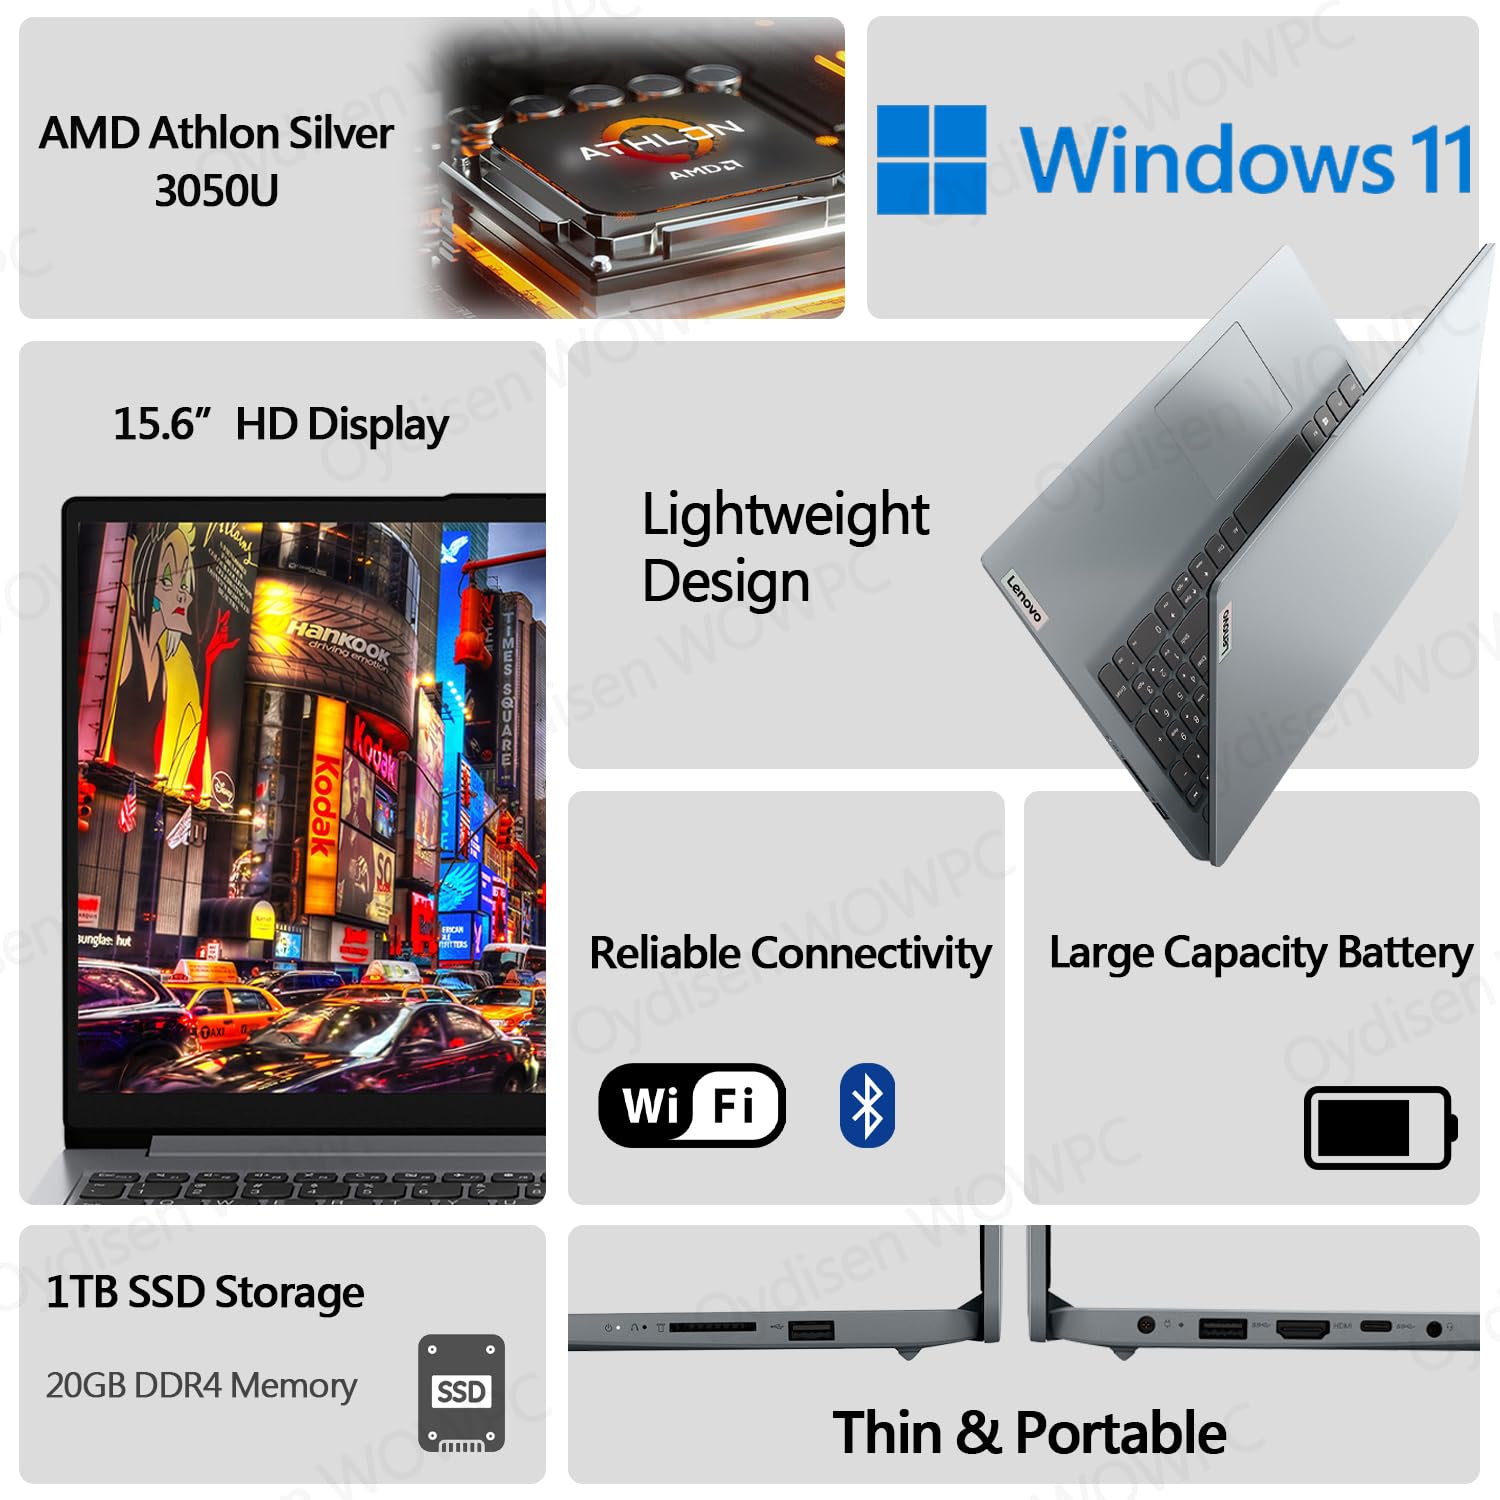 Lenovo 15.6" Laptop, IdeaPad 1, 20GB RAM, 1TB PCIe SSD, Wi-Fi 6 and Bluetooth 5.1, HDMI, SD Card Reader, 15.6" HD Anti-Glare Display, AMD Athlon Dual-core Processor, Windows 11 Home in S Mode  - Like New